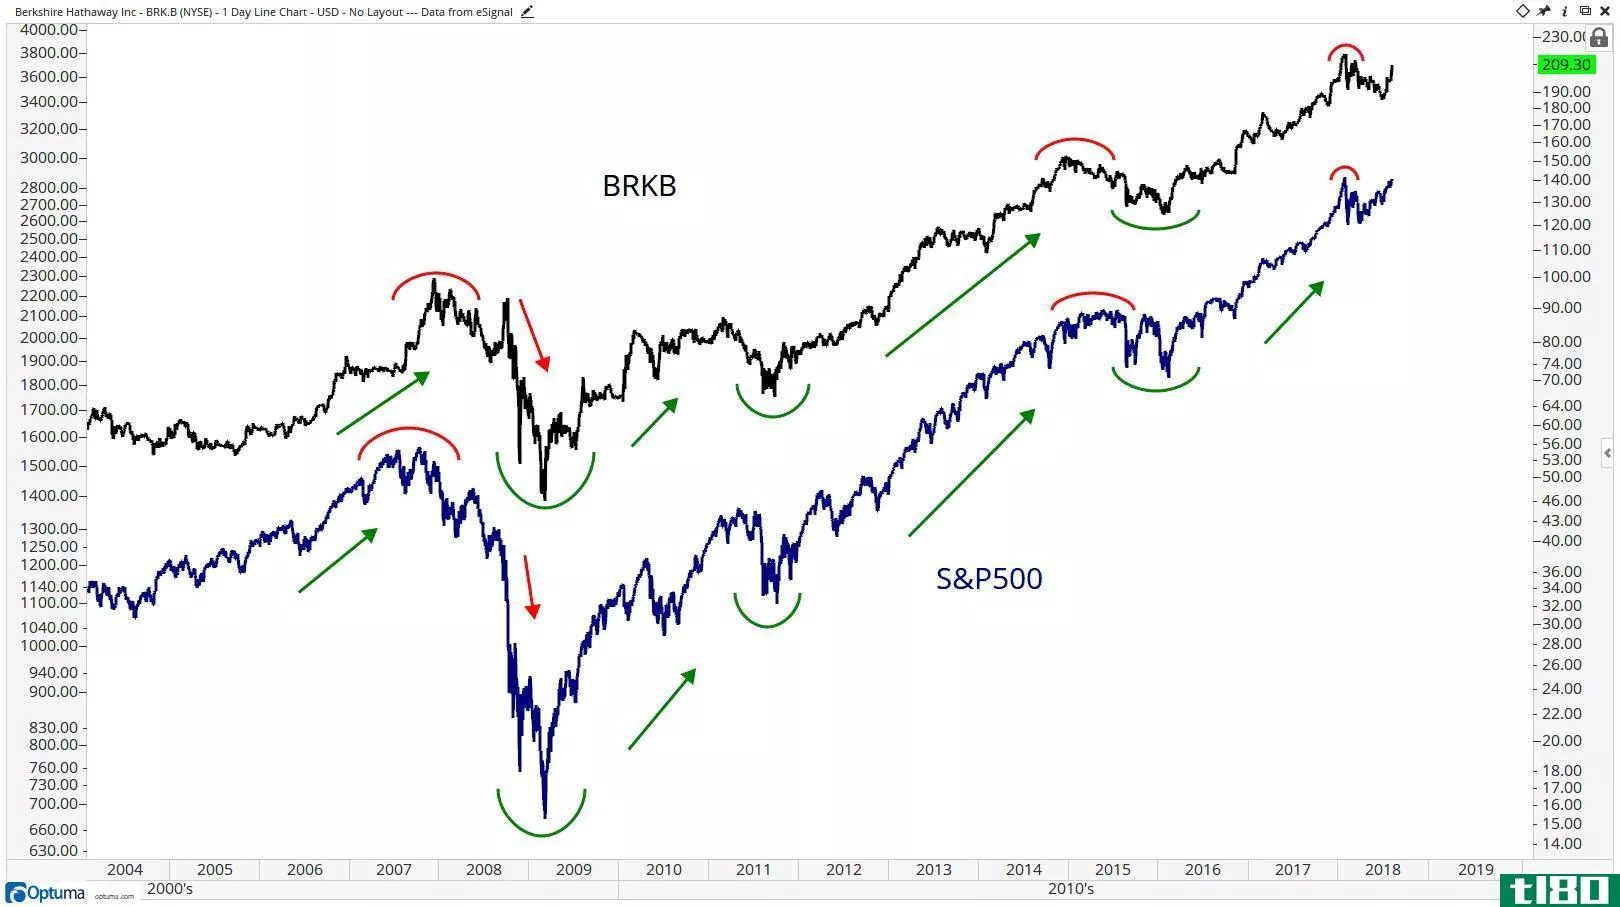 Technical chart showing Berkshire Hathaway Inc. (BRK.B) stock vs. the S&P 500